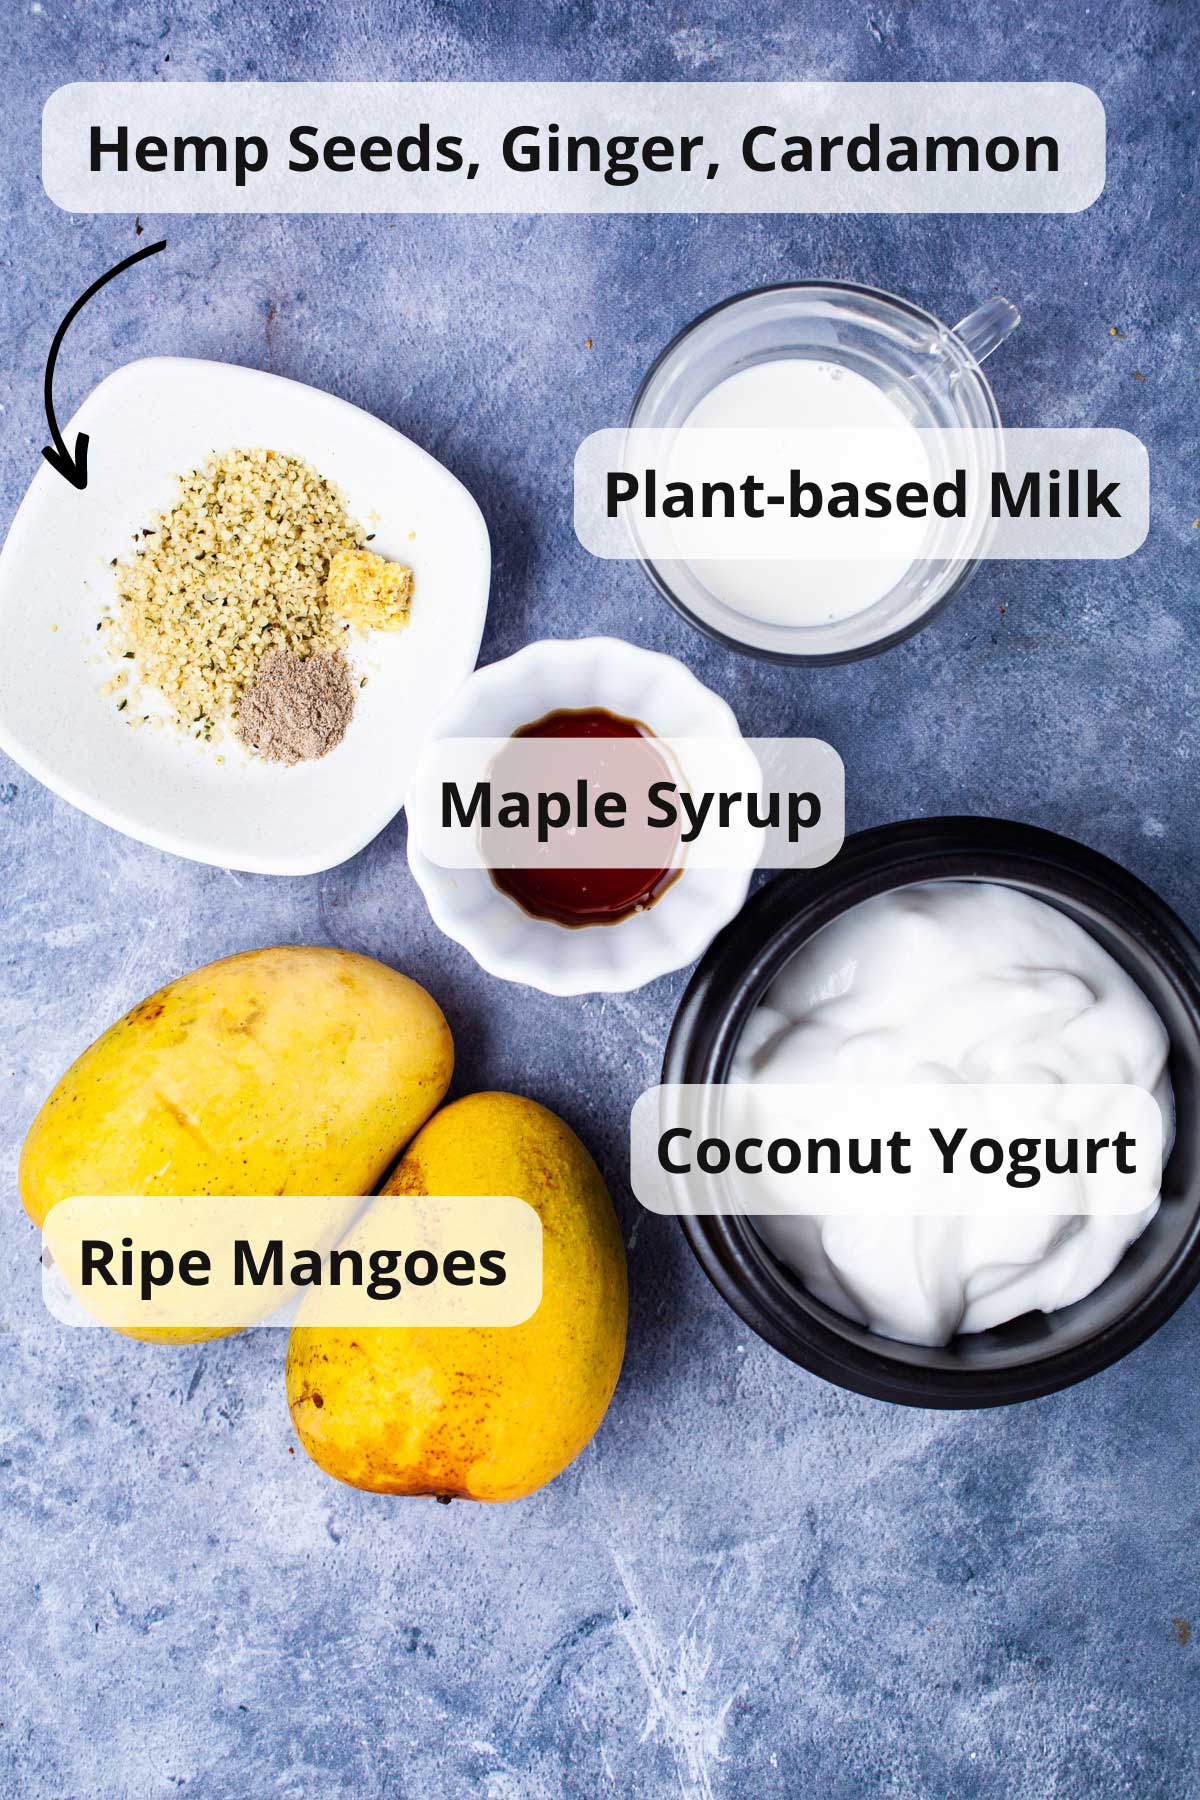 Ingredients like mangoes, maple syrup, ginger, hemp seeds, cardamom, yogurt displayed on a table.